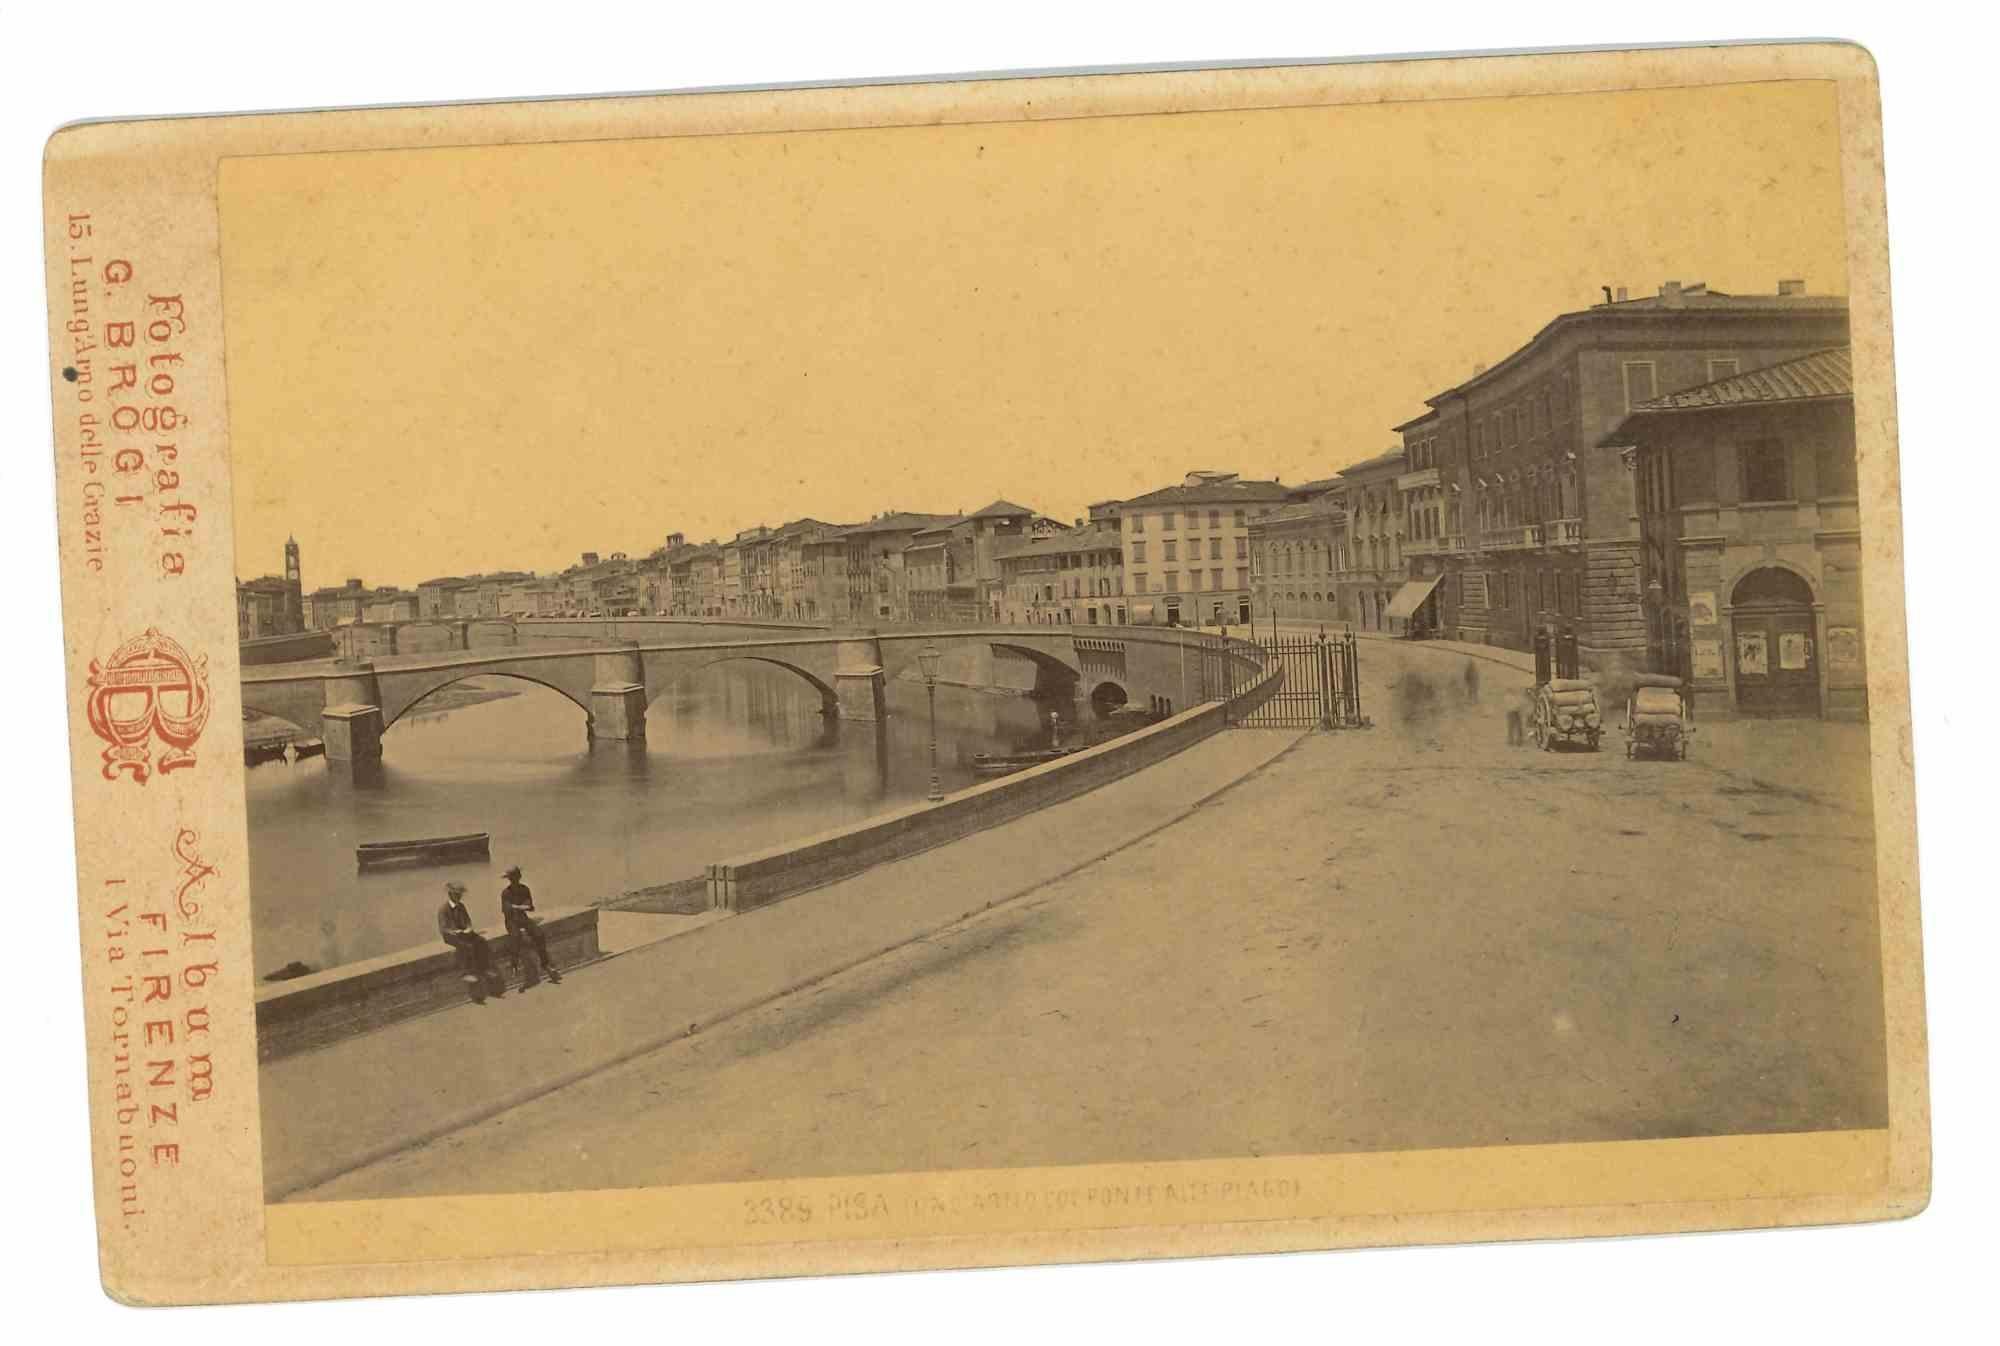 Unknown Figurative Photograph - The Old Days - Pisa, Lungarno Regio - Late 19th Century